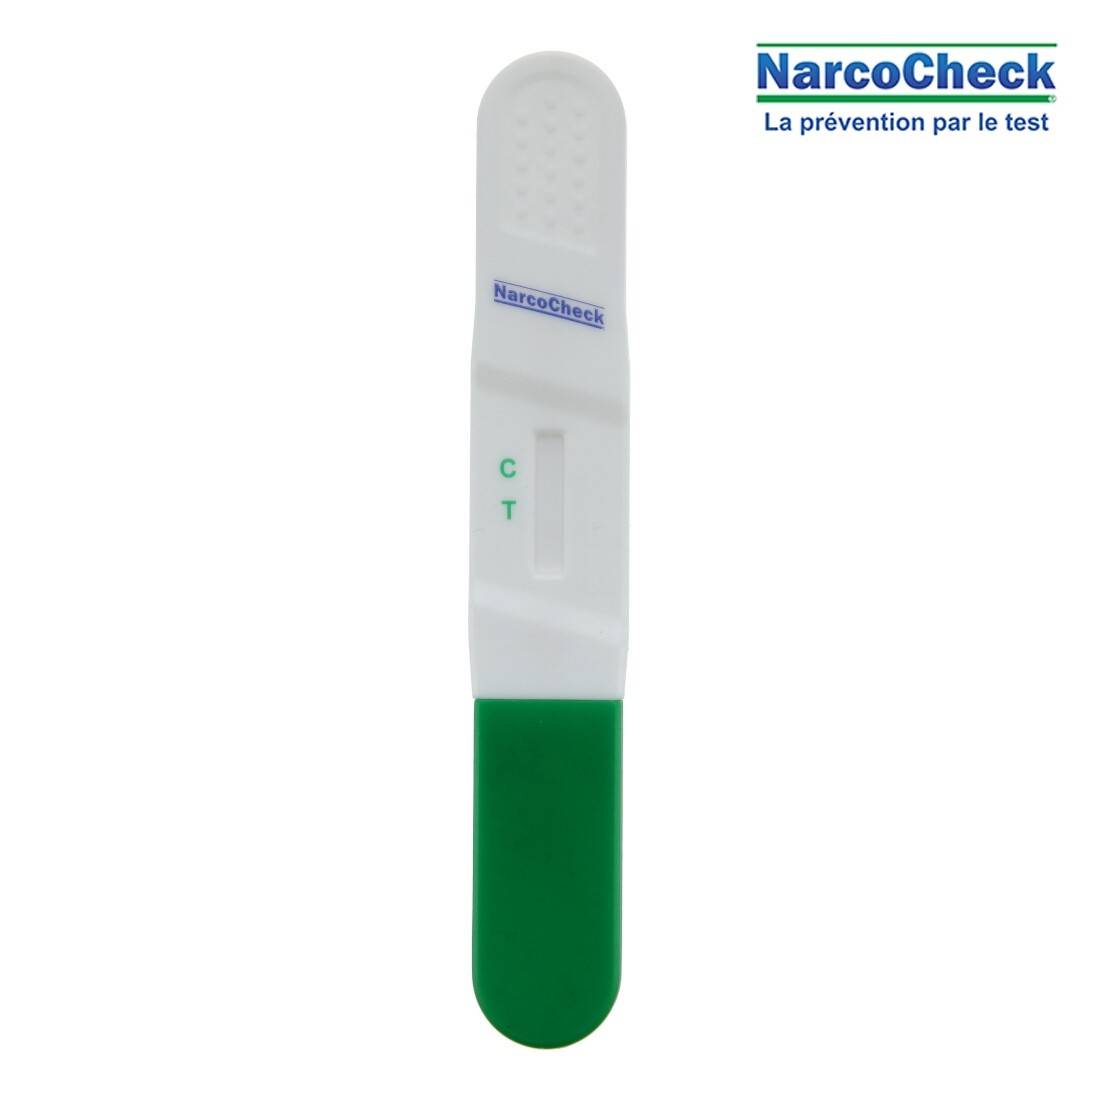 THC saliva test (marijuana only) - NarcoCheck